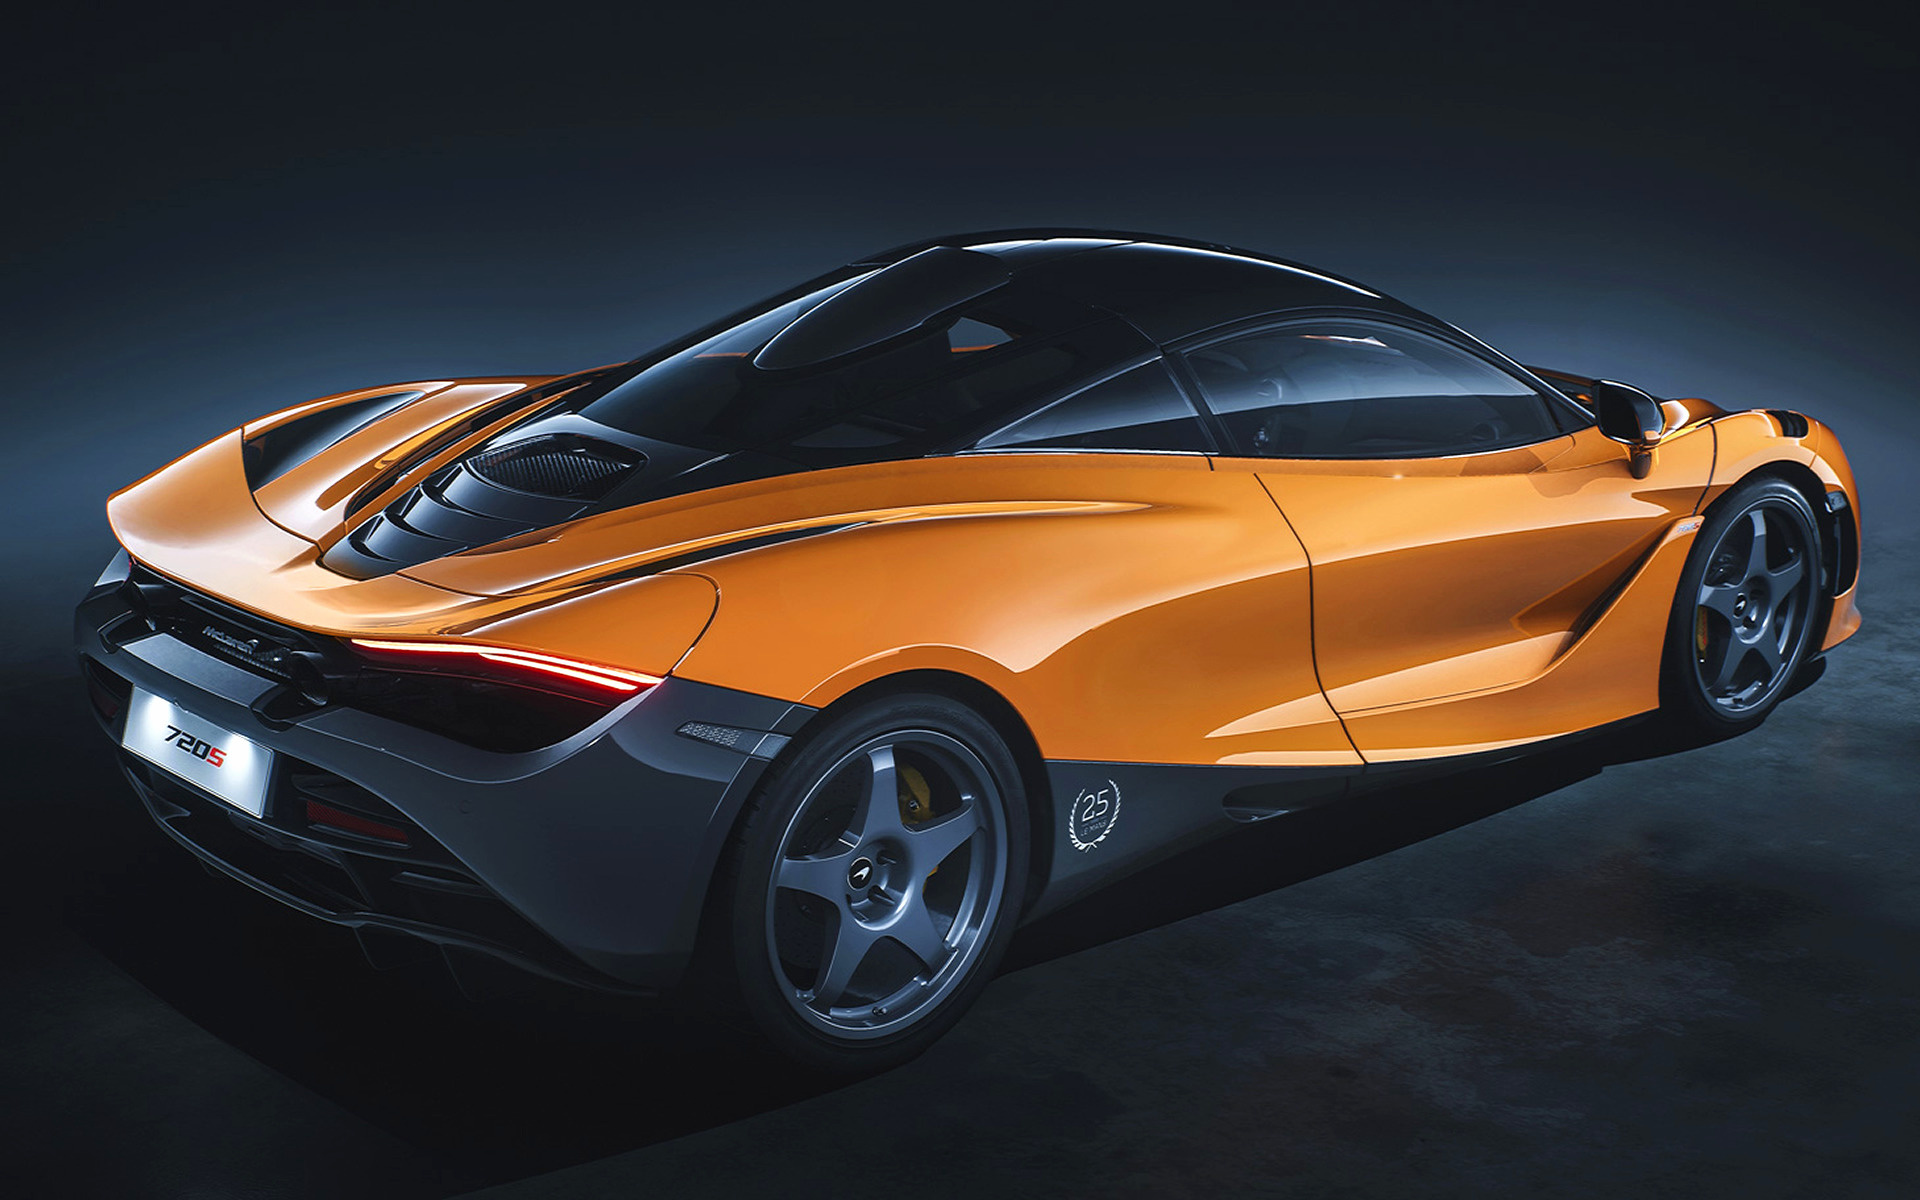 2020 McLaren 720S Le Mans - Wallpapers and HD Images | Car Pixel